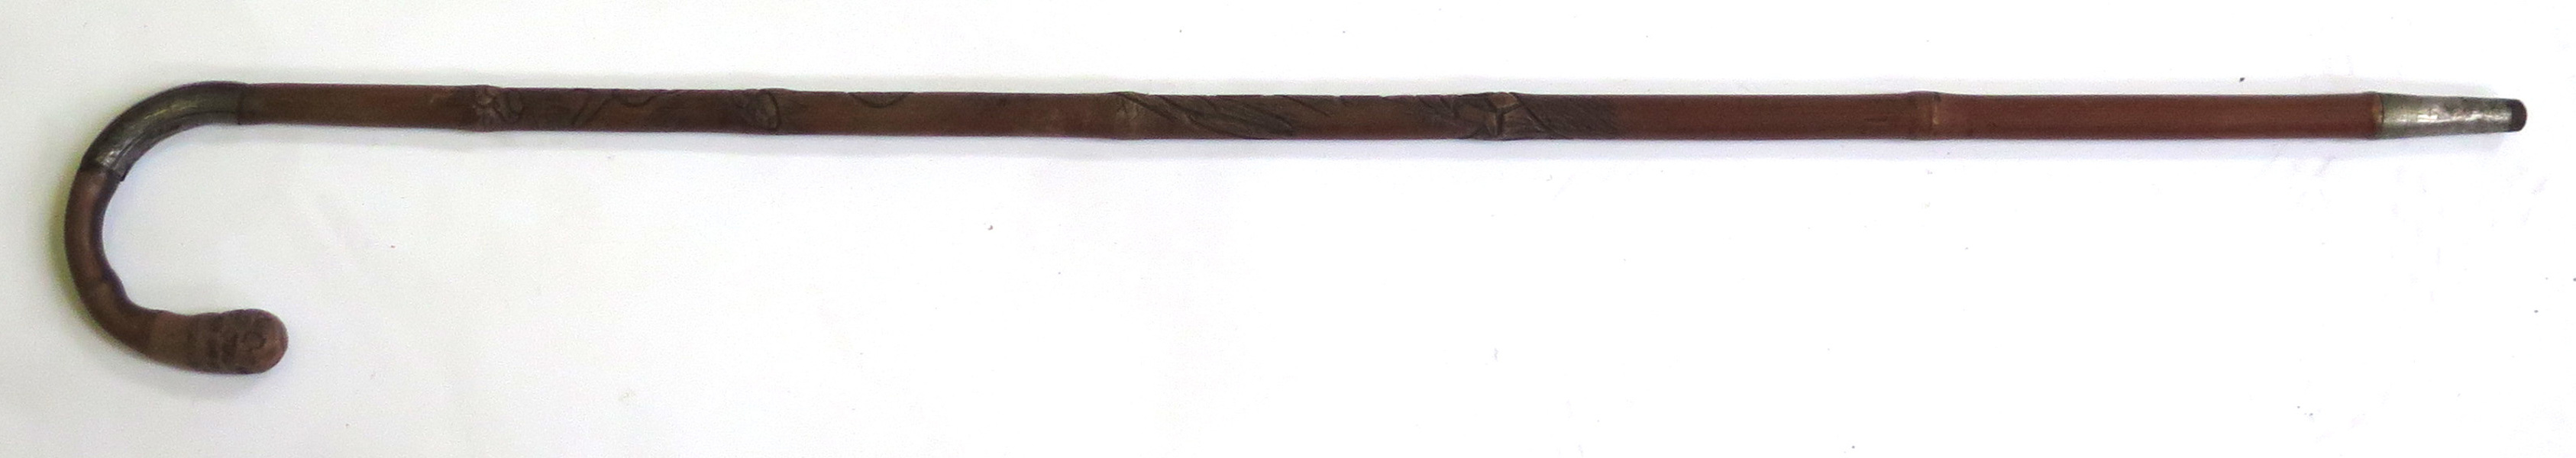 Käpp, bambu med silver(?)montage, antagligen Kina, sekelskiftet 1900,_12276a_lg.jpeg